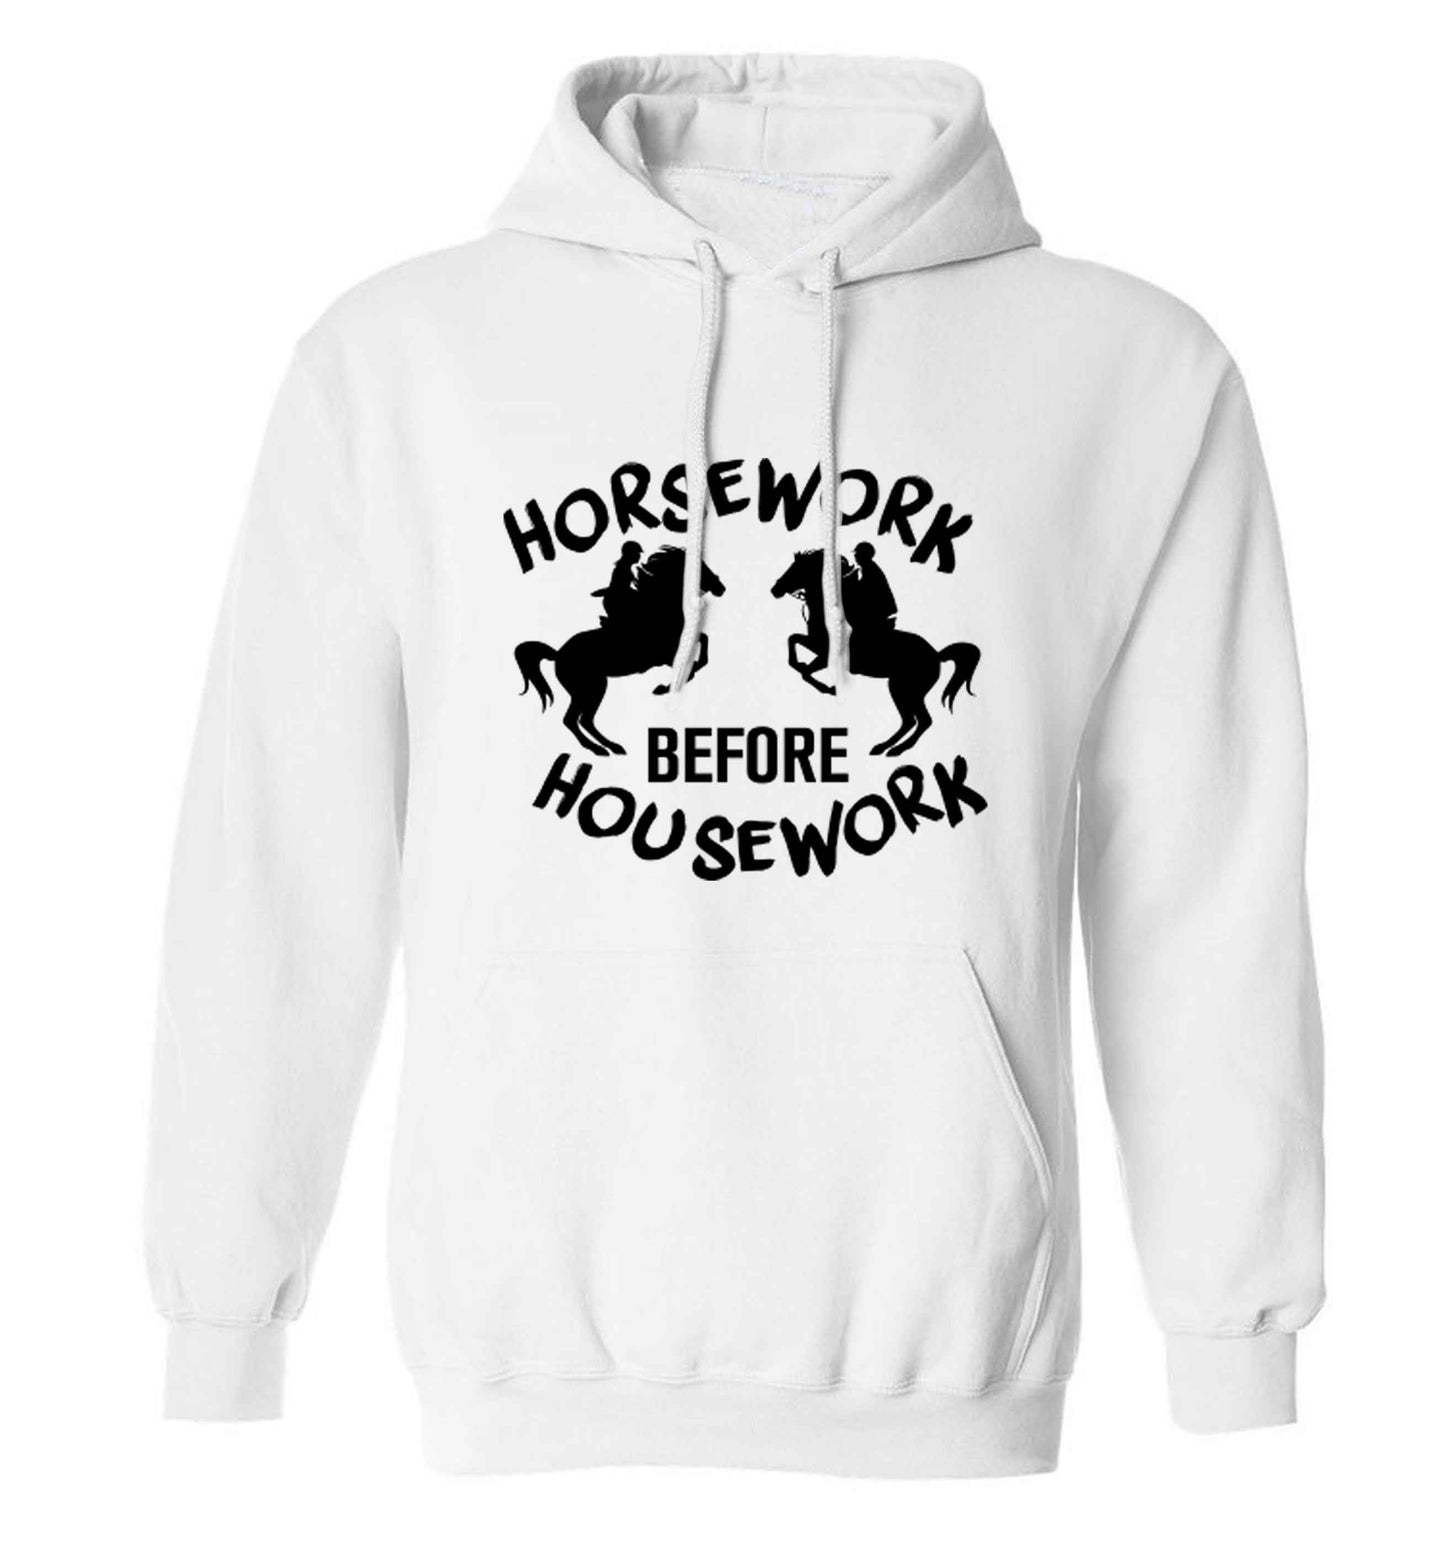 Horsework before housework adults unisex white hoodie 2XL